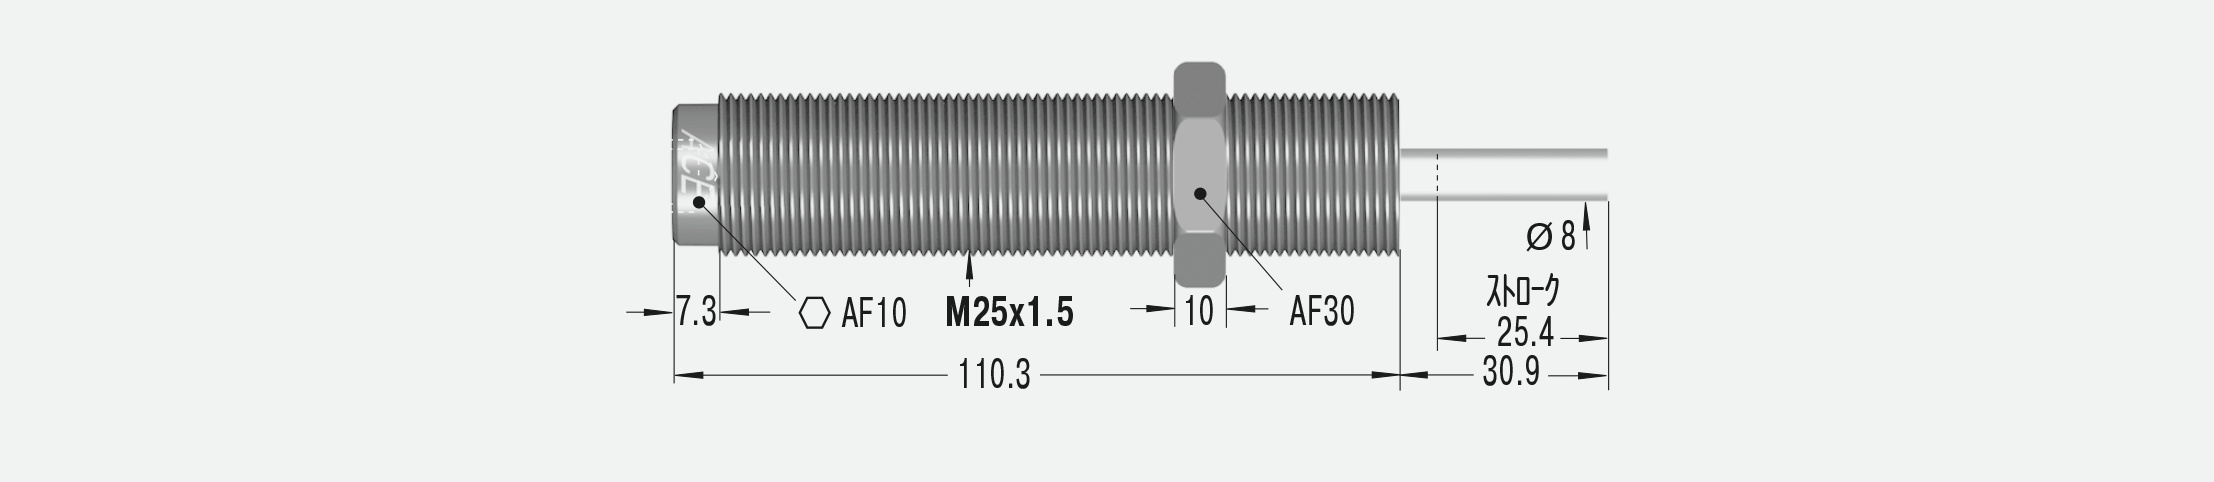 MC600MH3-V4A